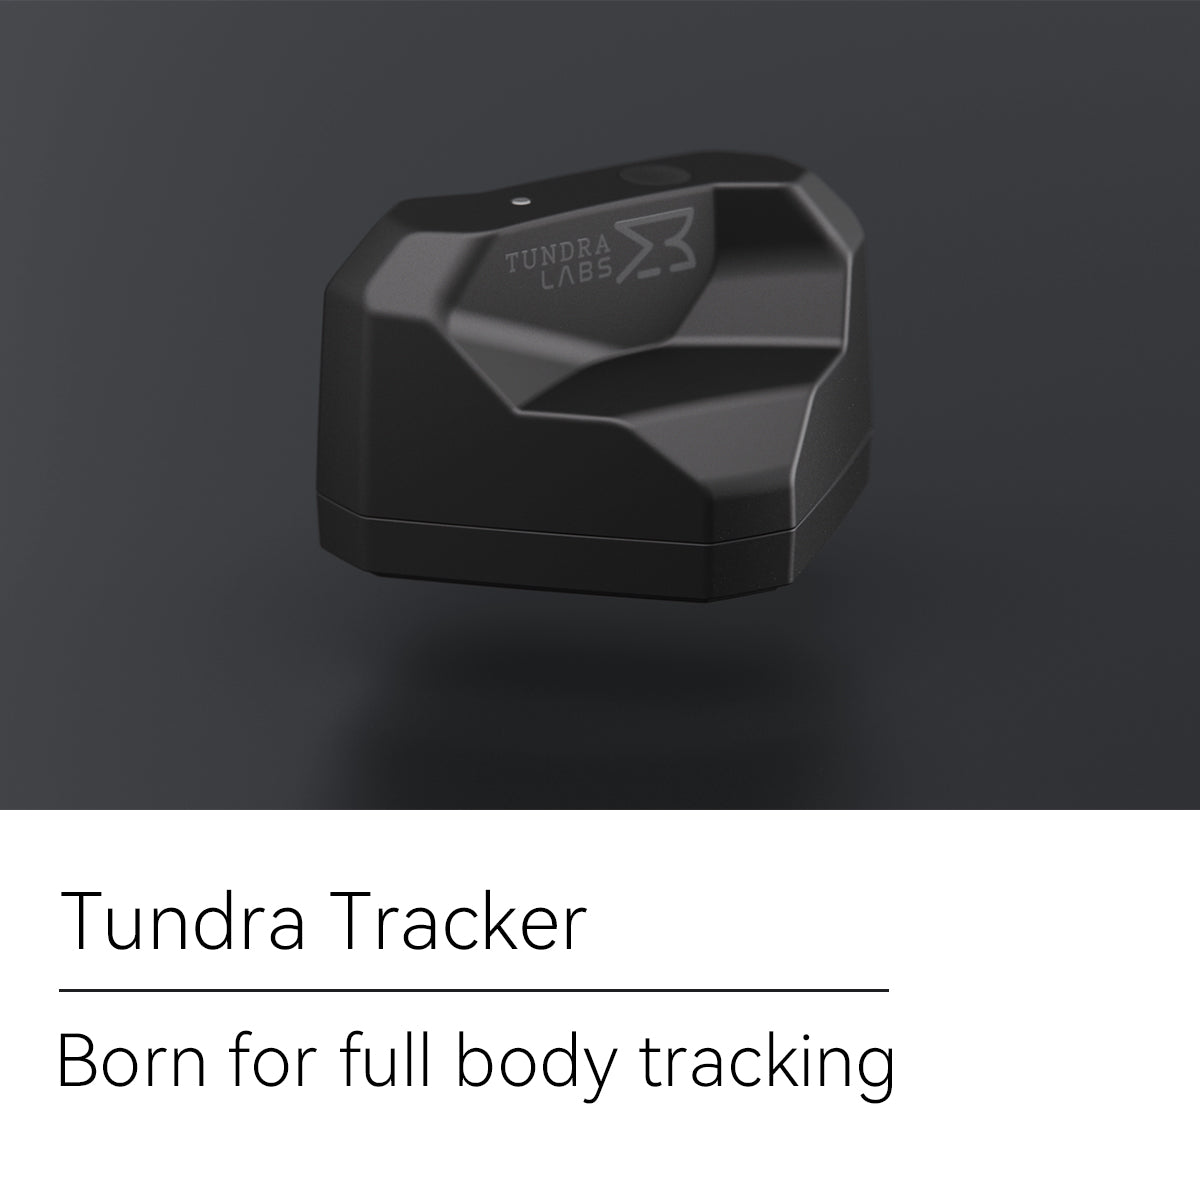 3. Tundra Tracker – EOZ VR